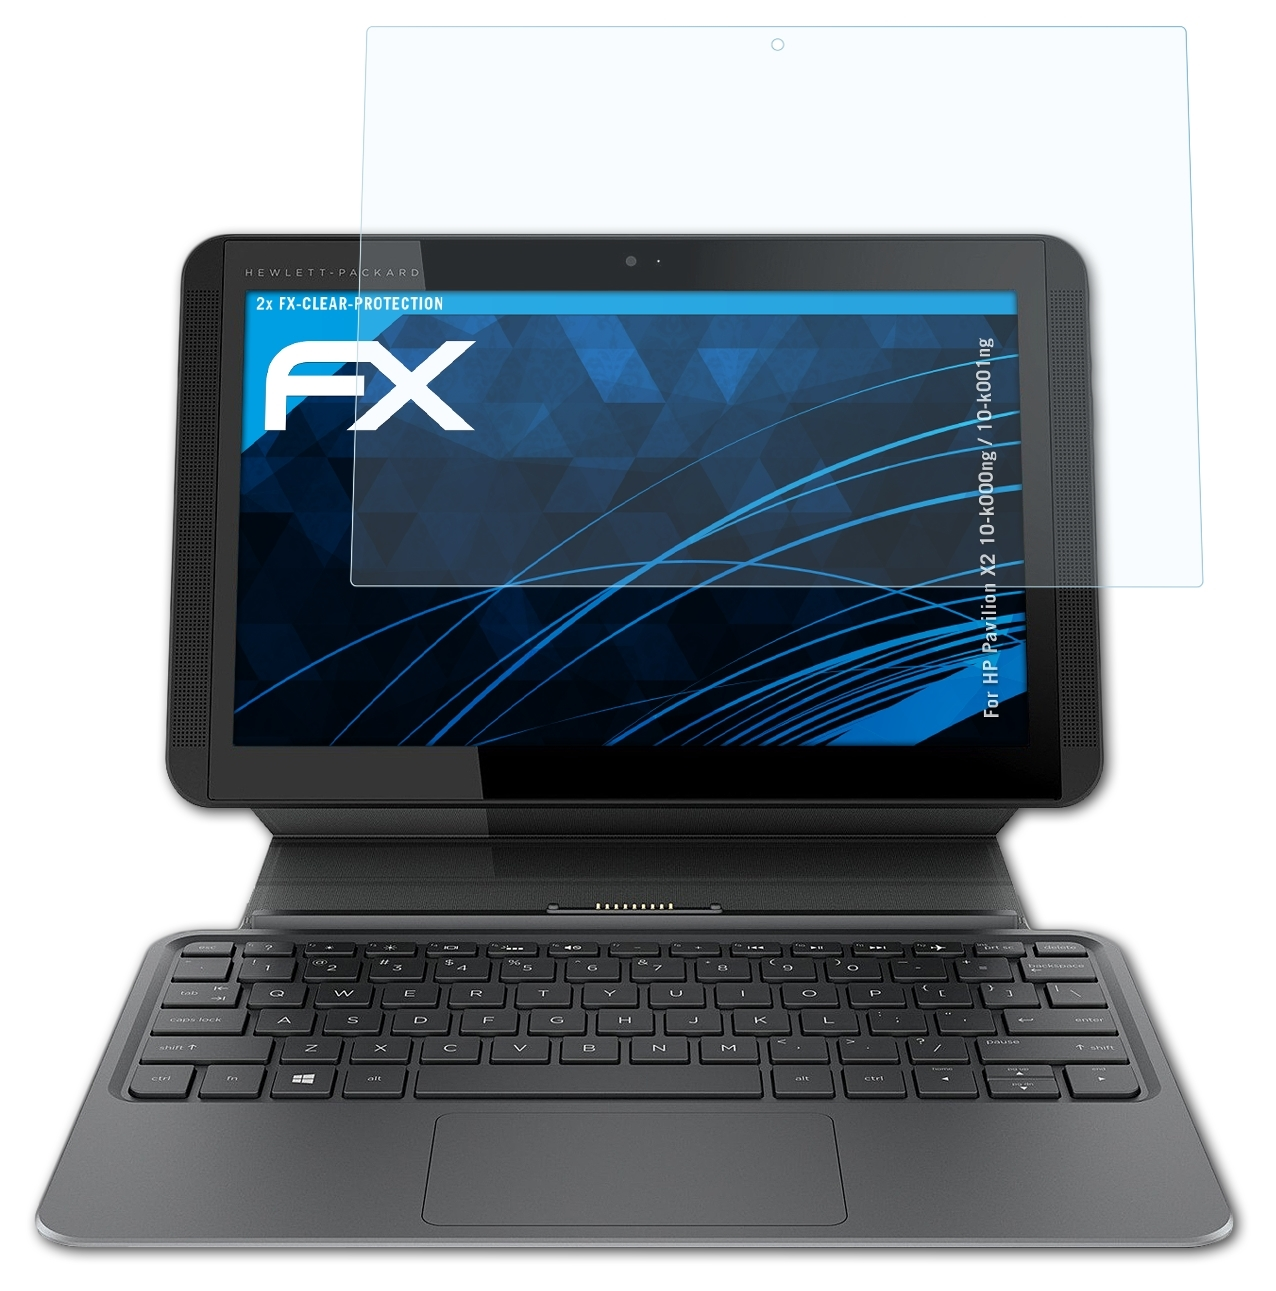 10-k001ng) ATFOLIX Pavilion FX-Clear / 2x HP Displayschutz(für X2 10-k000ng